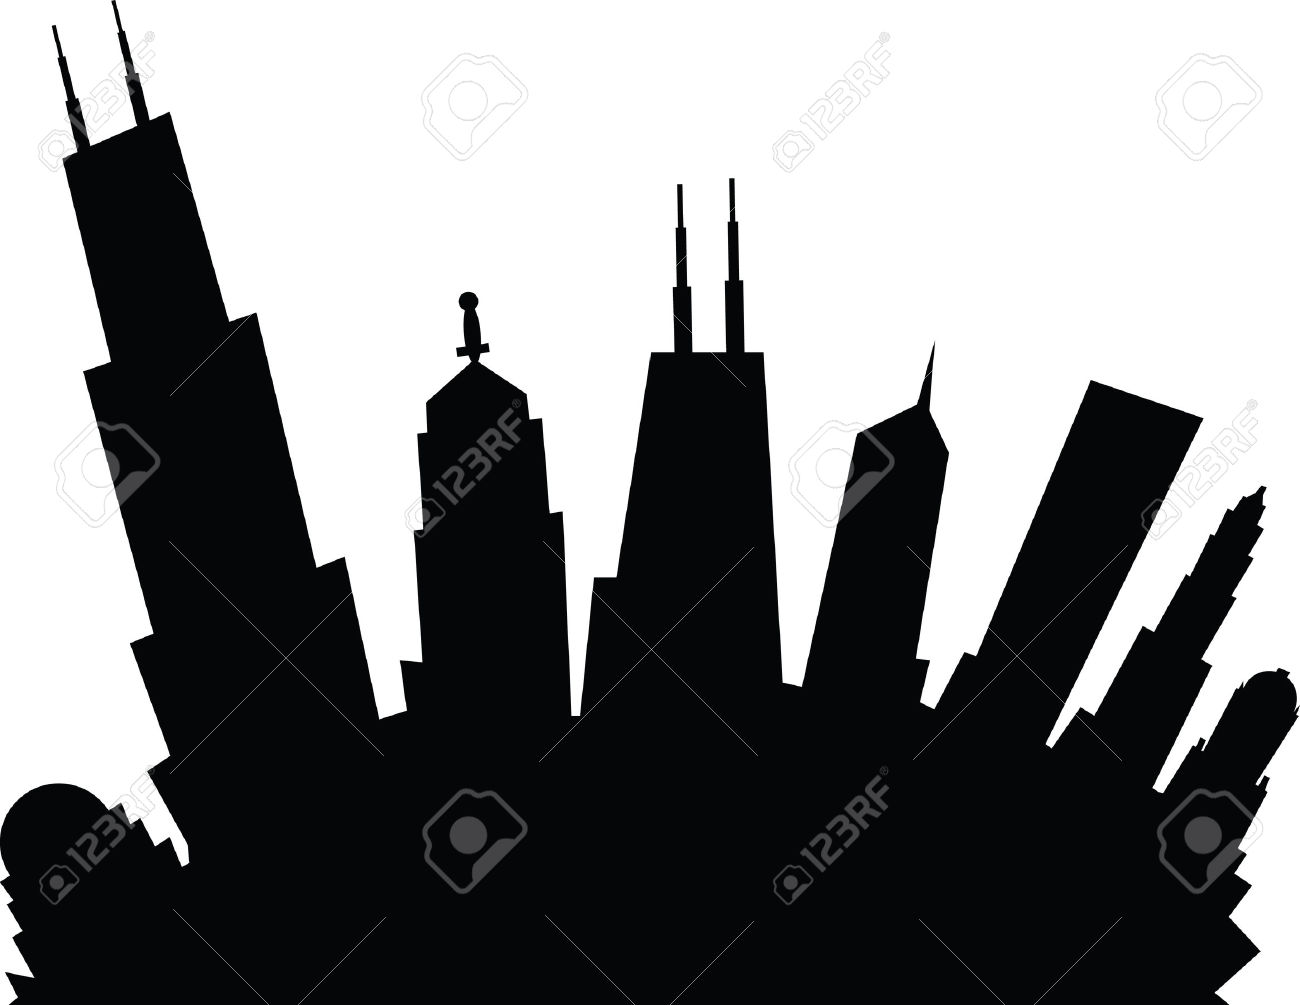 chicago skyline: Cartoon skyline silhouette of the city of Chicago, Illinois, USA.